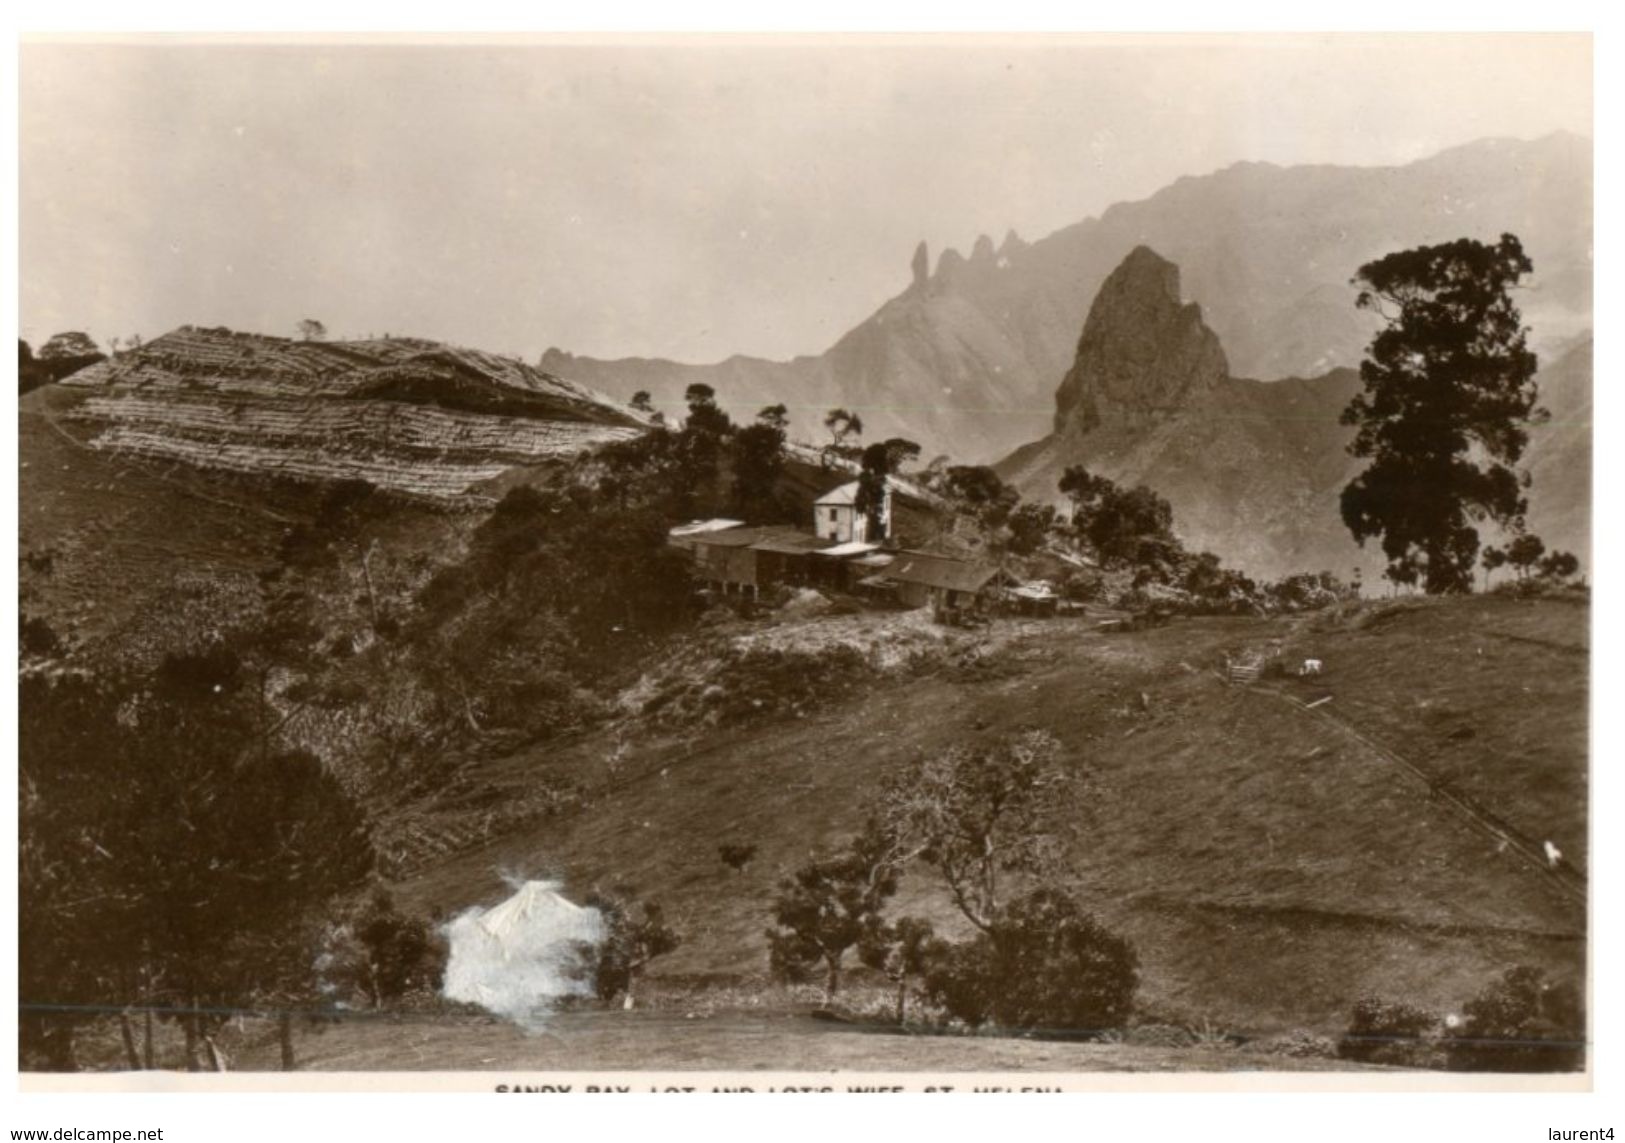 (105) Very Old Postcard / Carte Ancienne - St Helena Island - Sandy Bay - Saint Helena Island